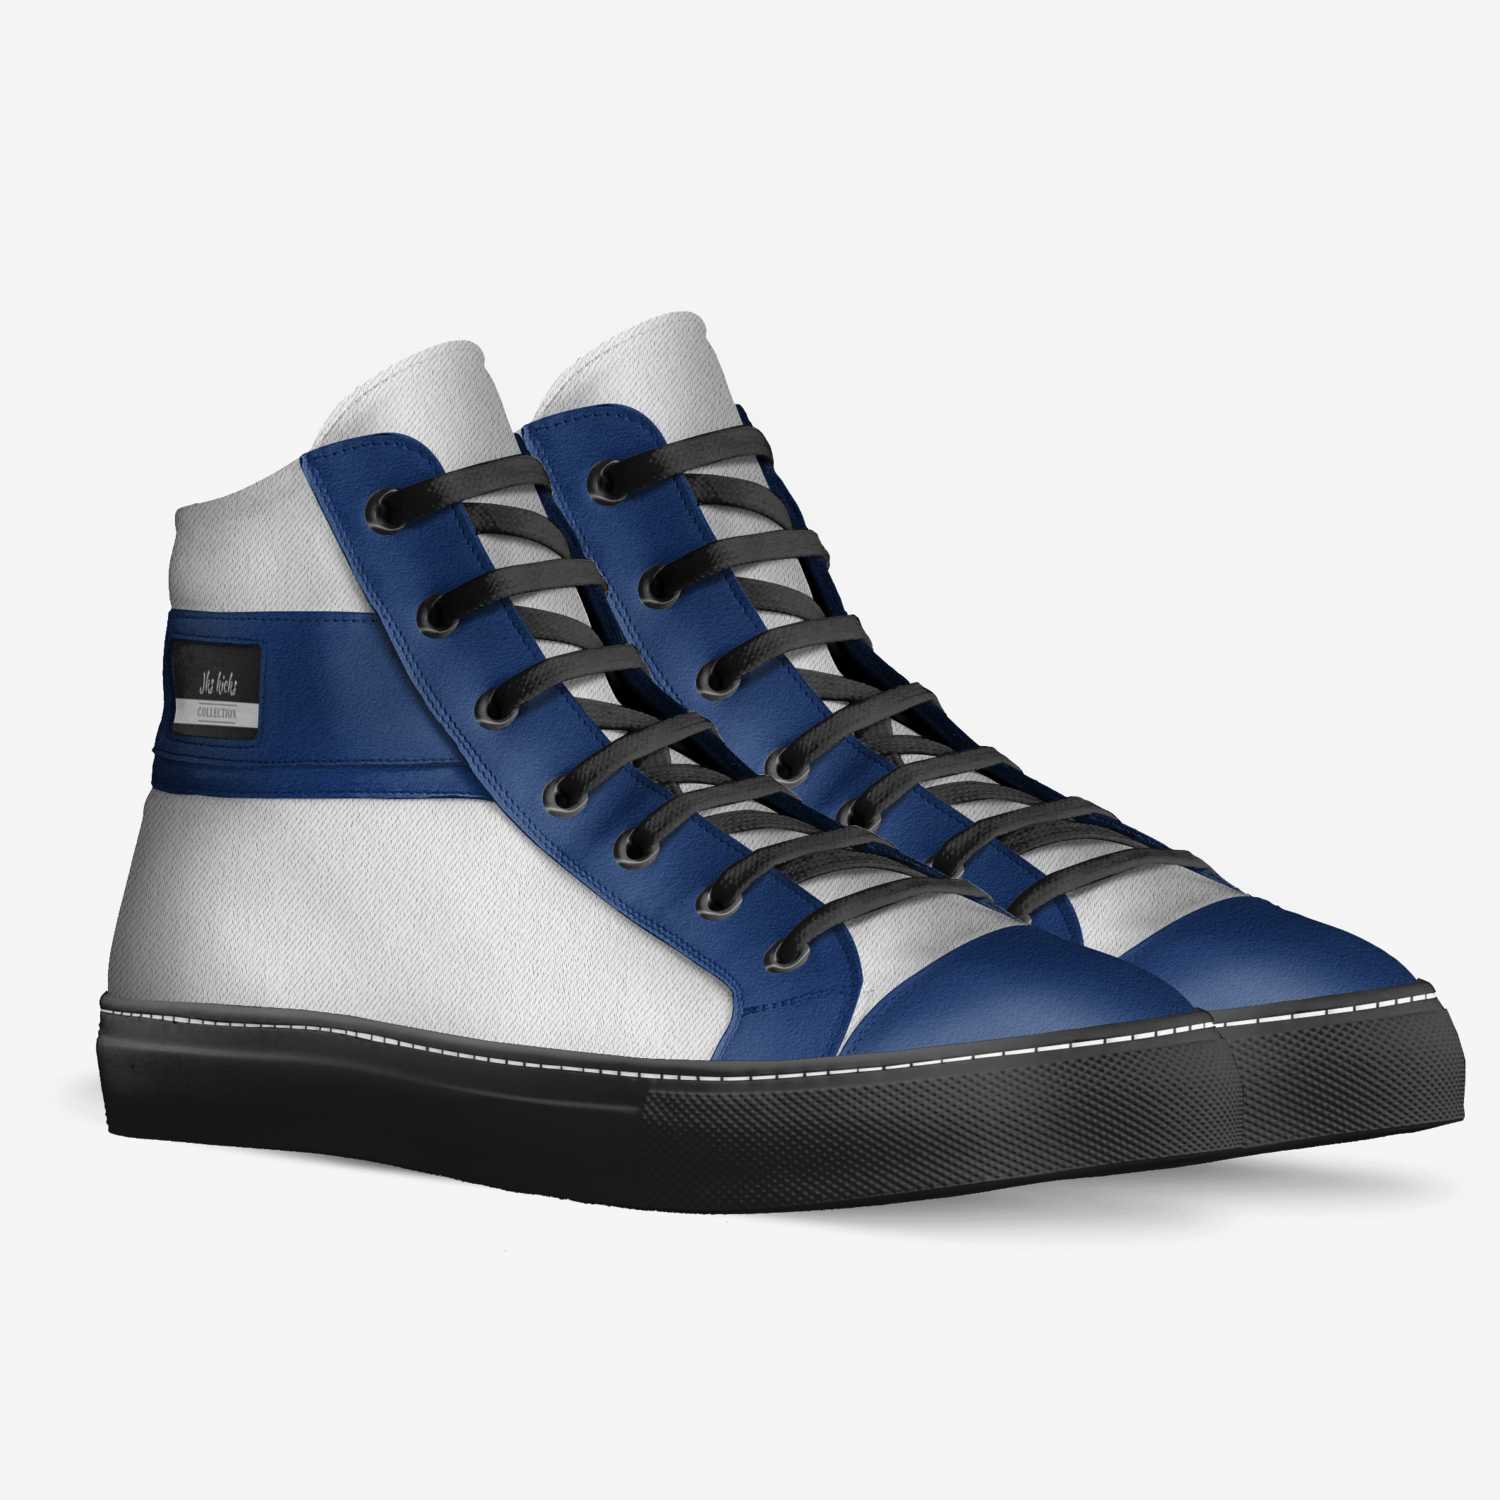 Jk kicks | Custom Shoe concept by Jk